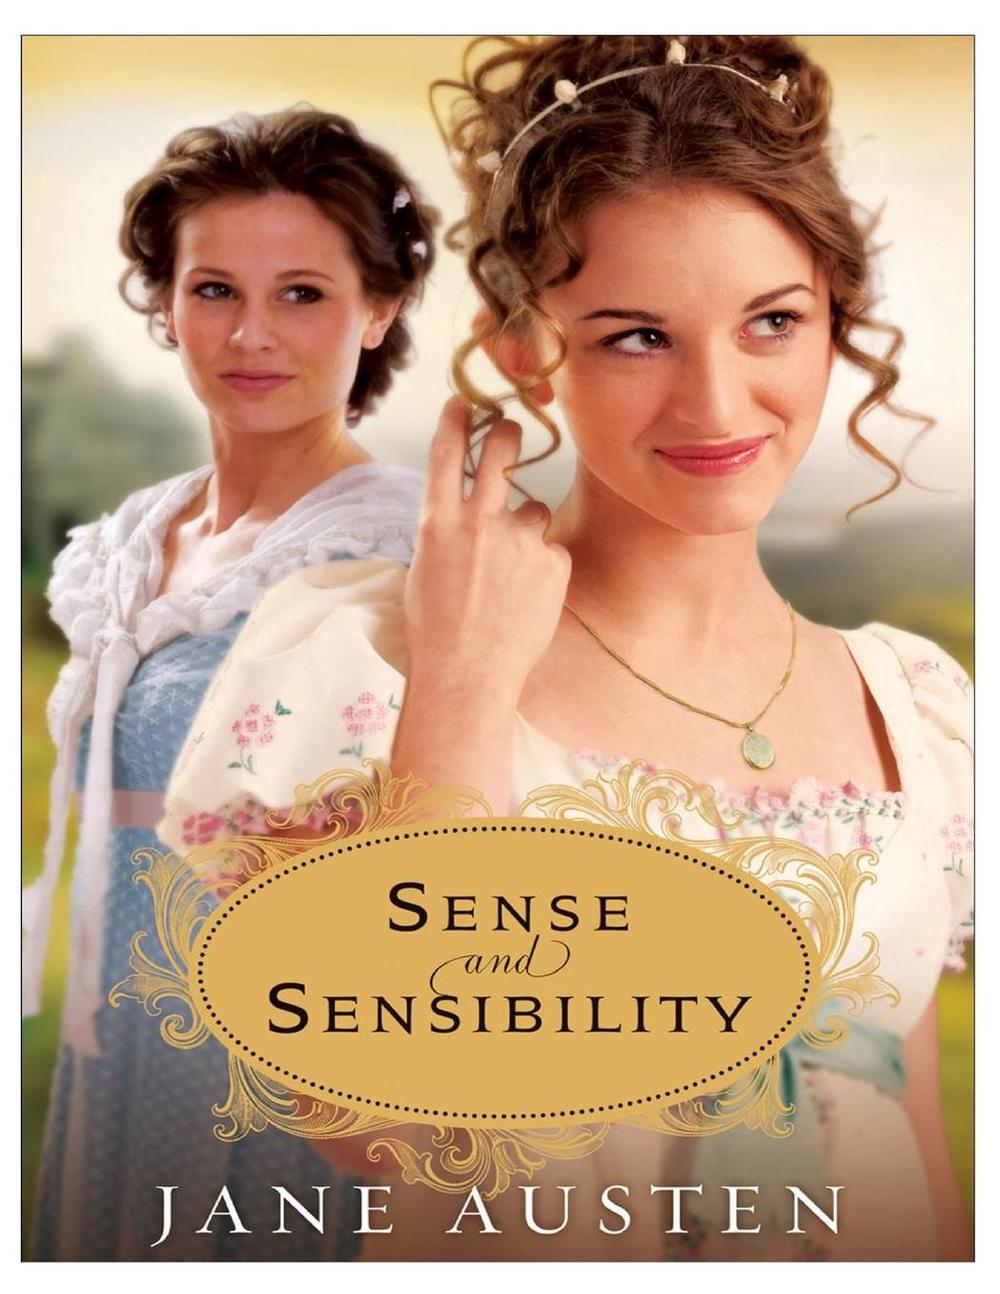 book review jane austen sense and sensibility